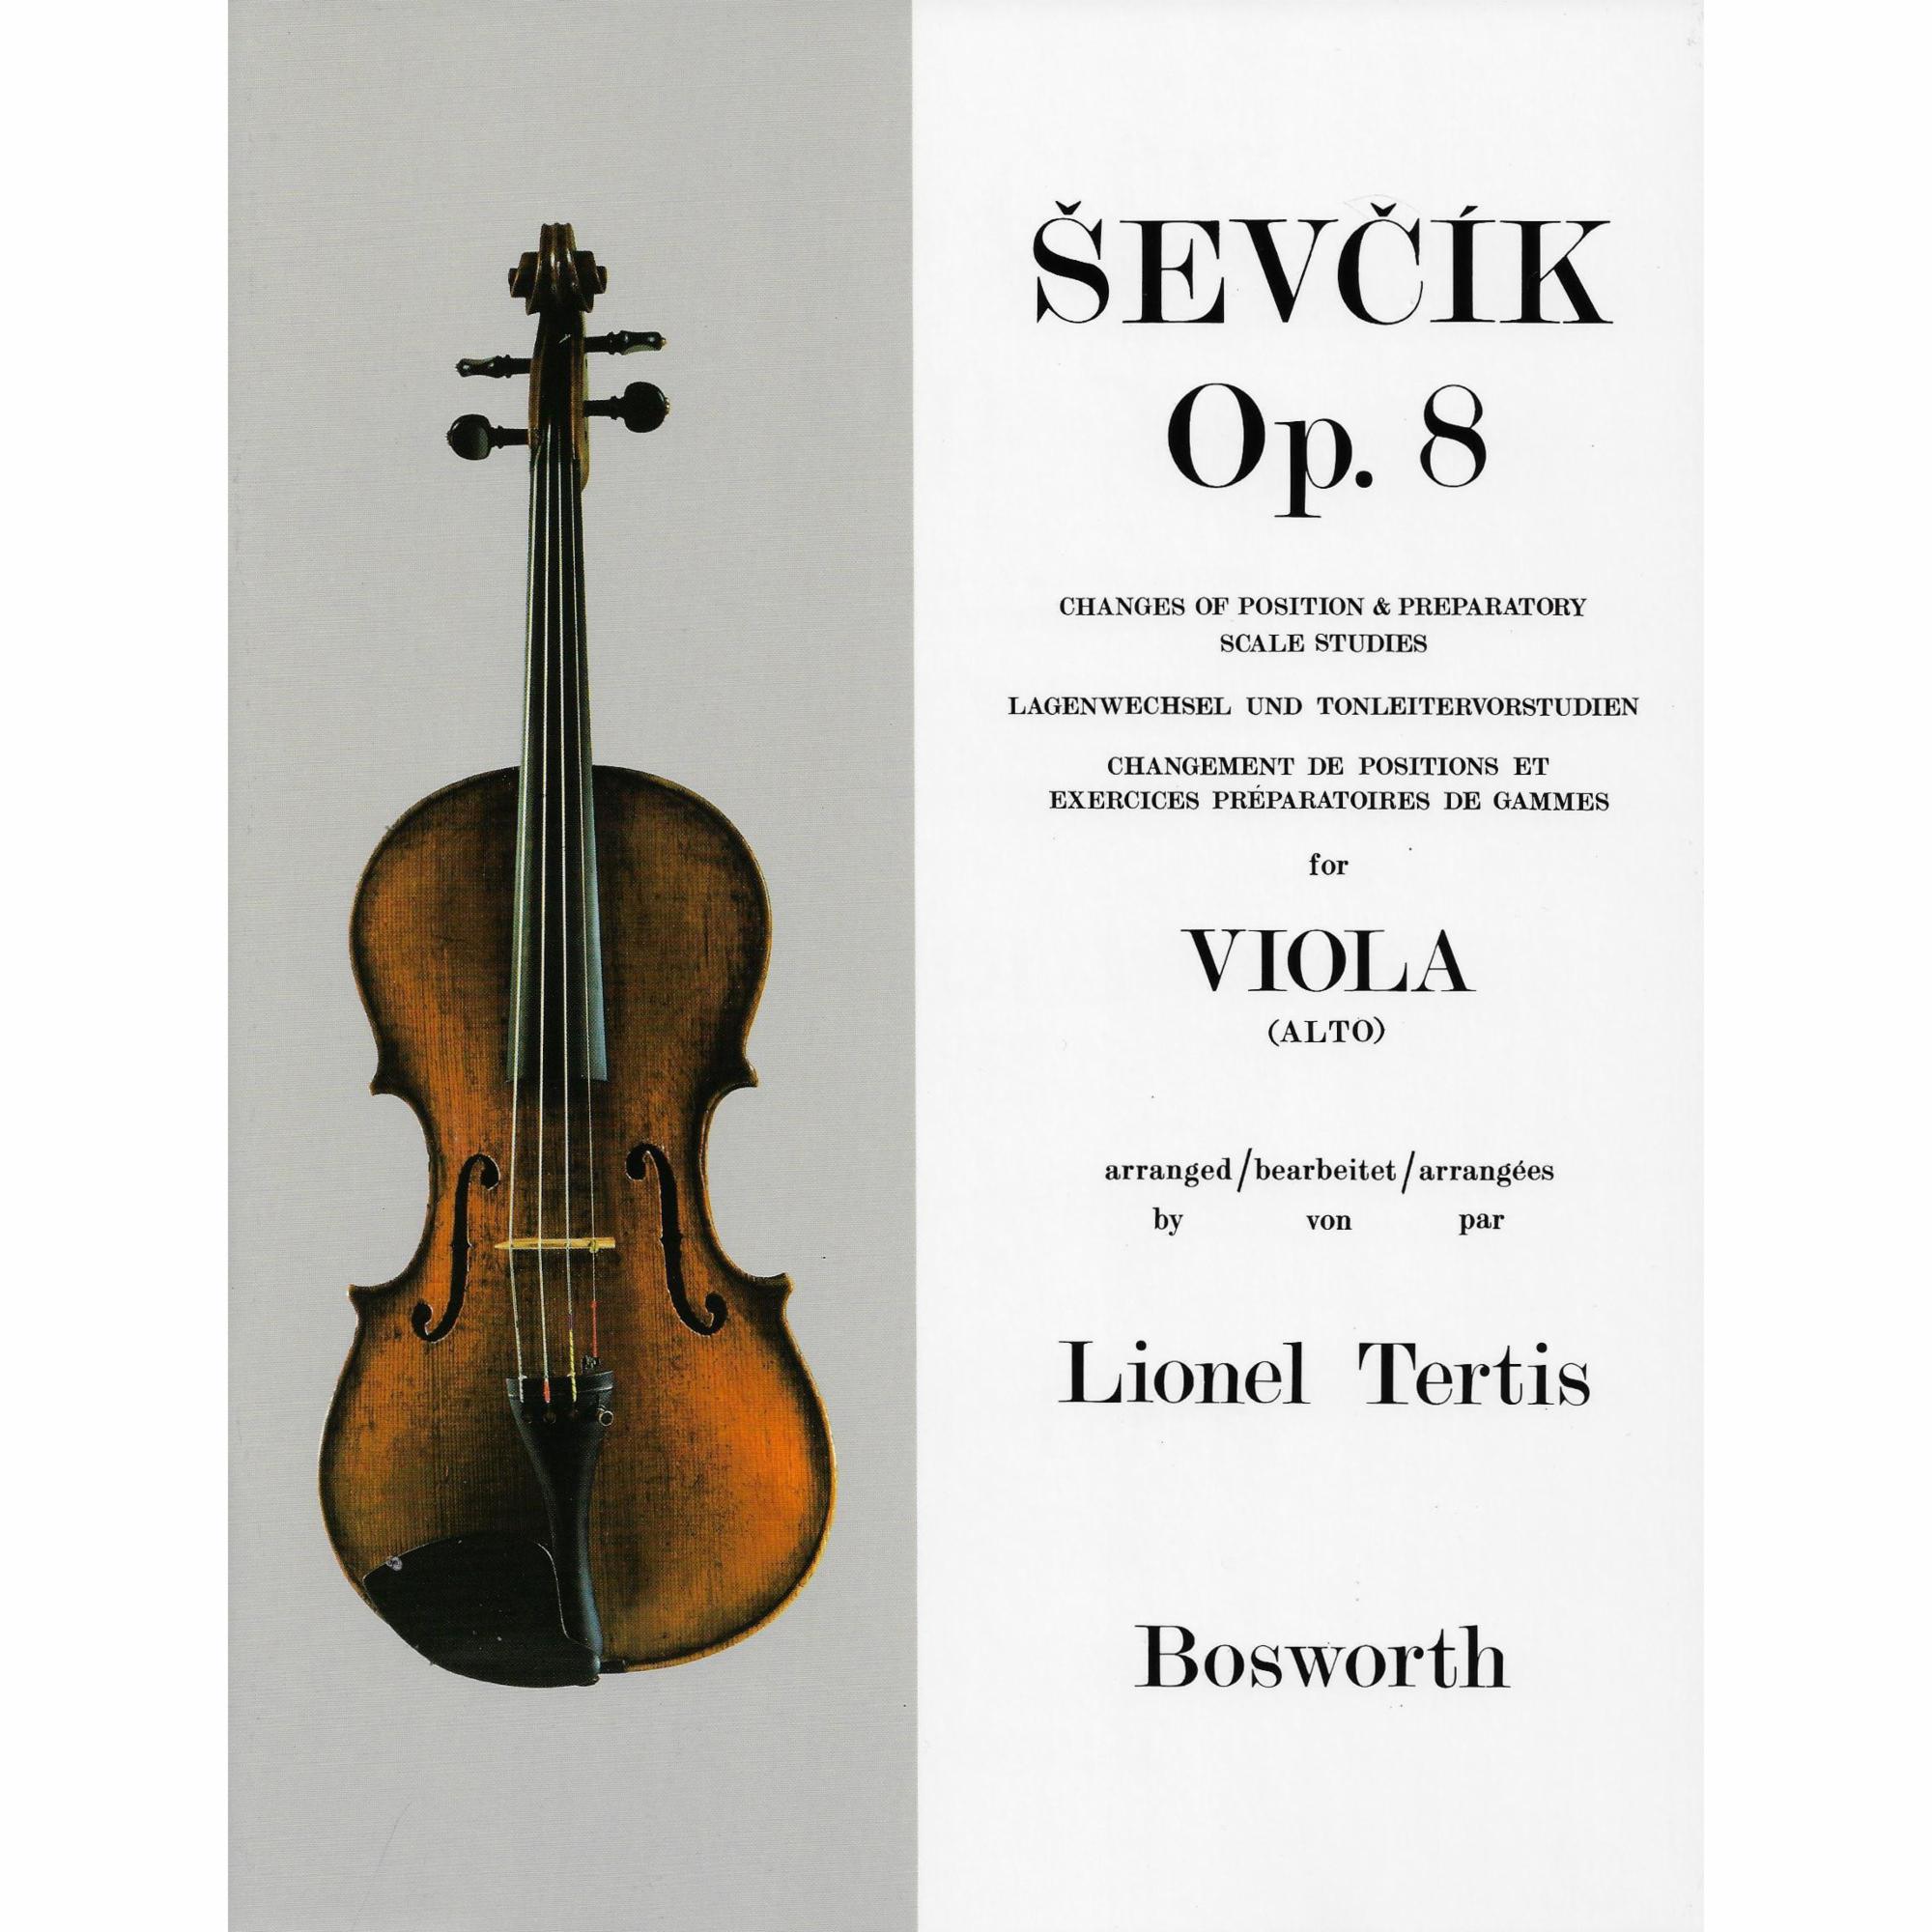 Sevcik -- Changes of Position & Preparatory Scale Studies, Op. 8 for Viola